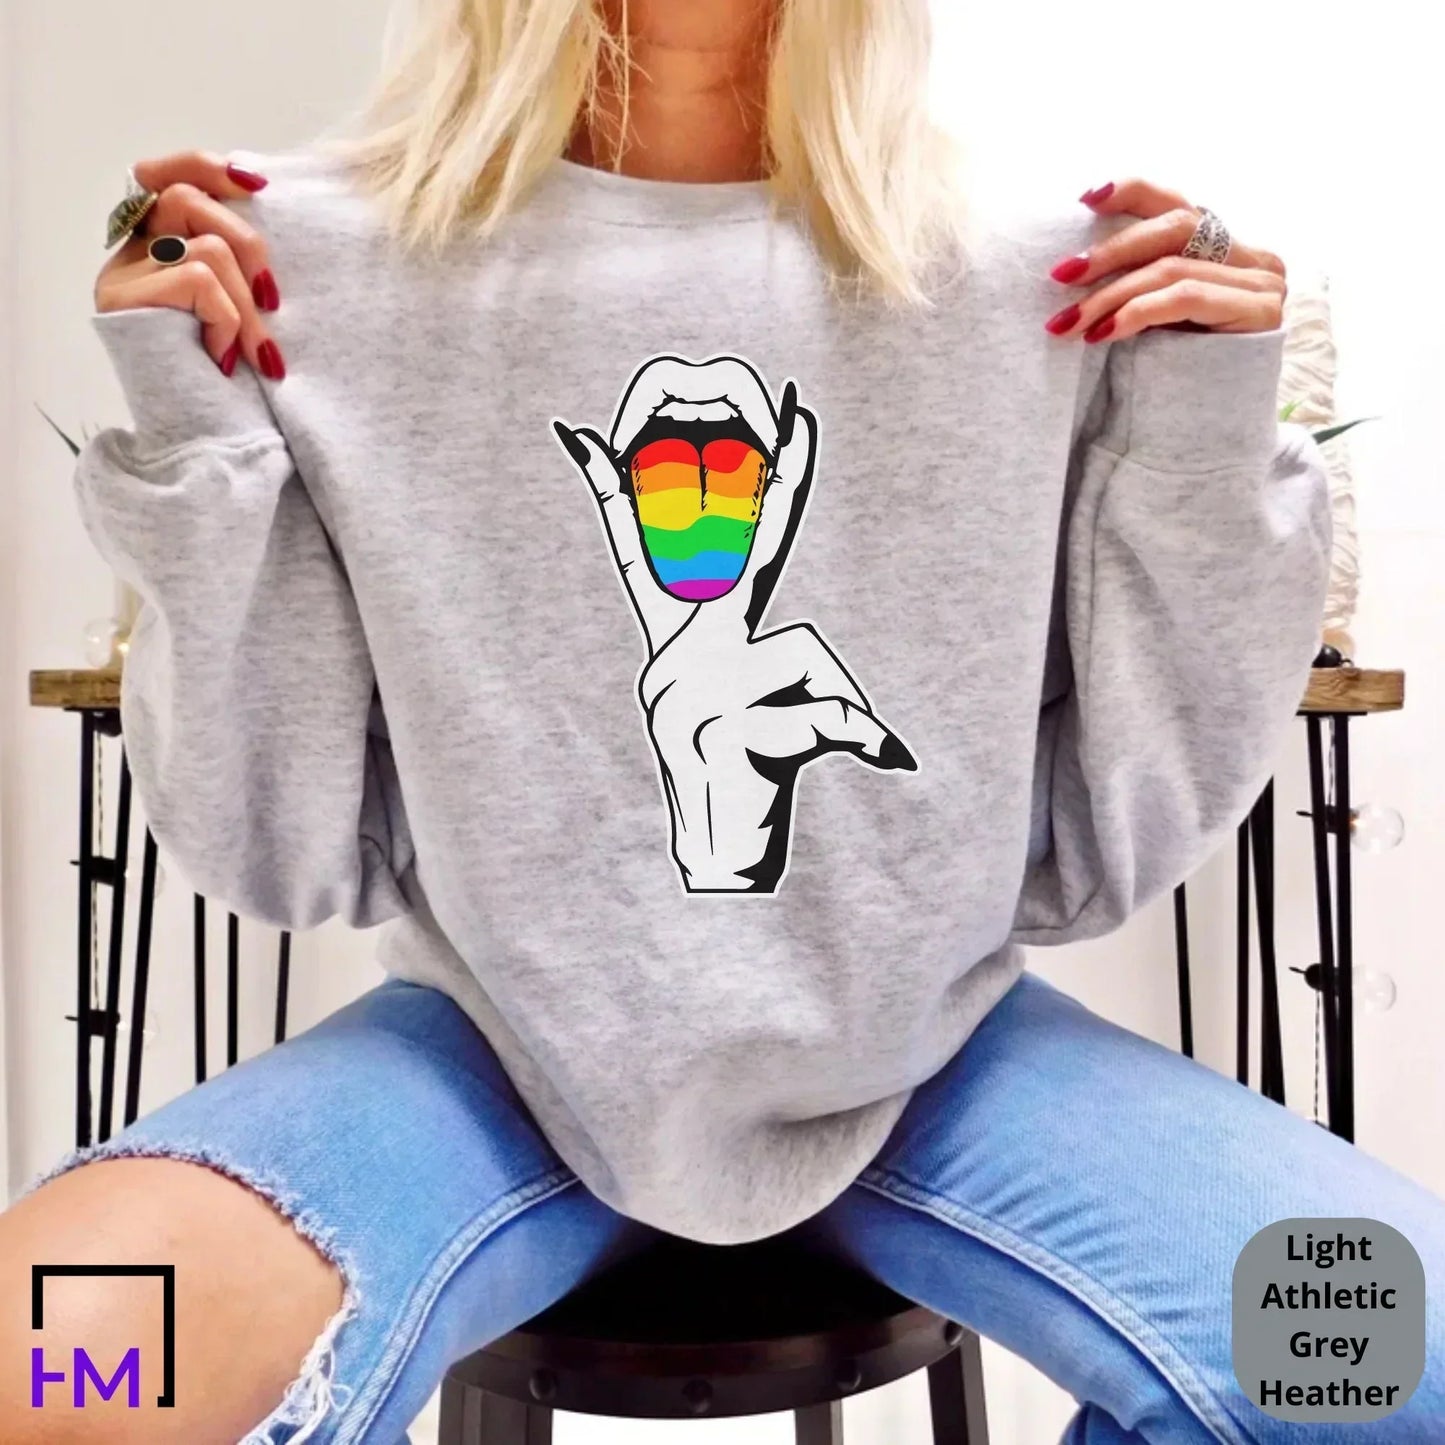 Lesbian Shirt, Peace Rainbow, Human Rights Love is Love Shirt, Retro Hippie Shirt, Equality T-Shirt, LGBTQ Support Shirts, LGBTQ Pride Tees HMDesignStudioUS